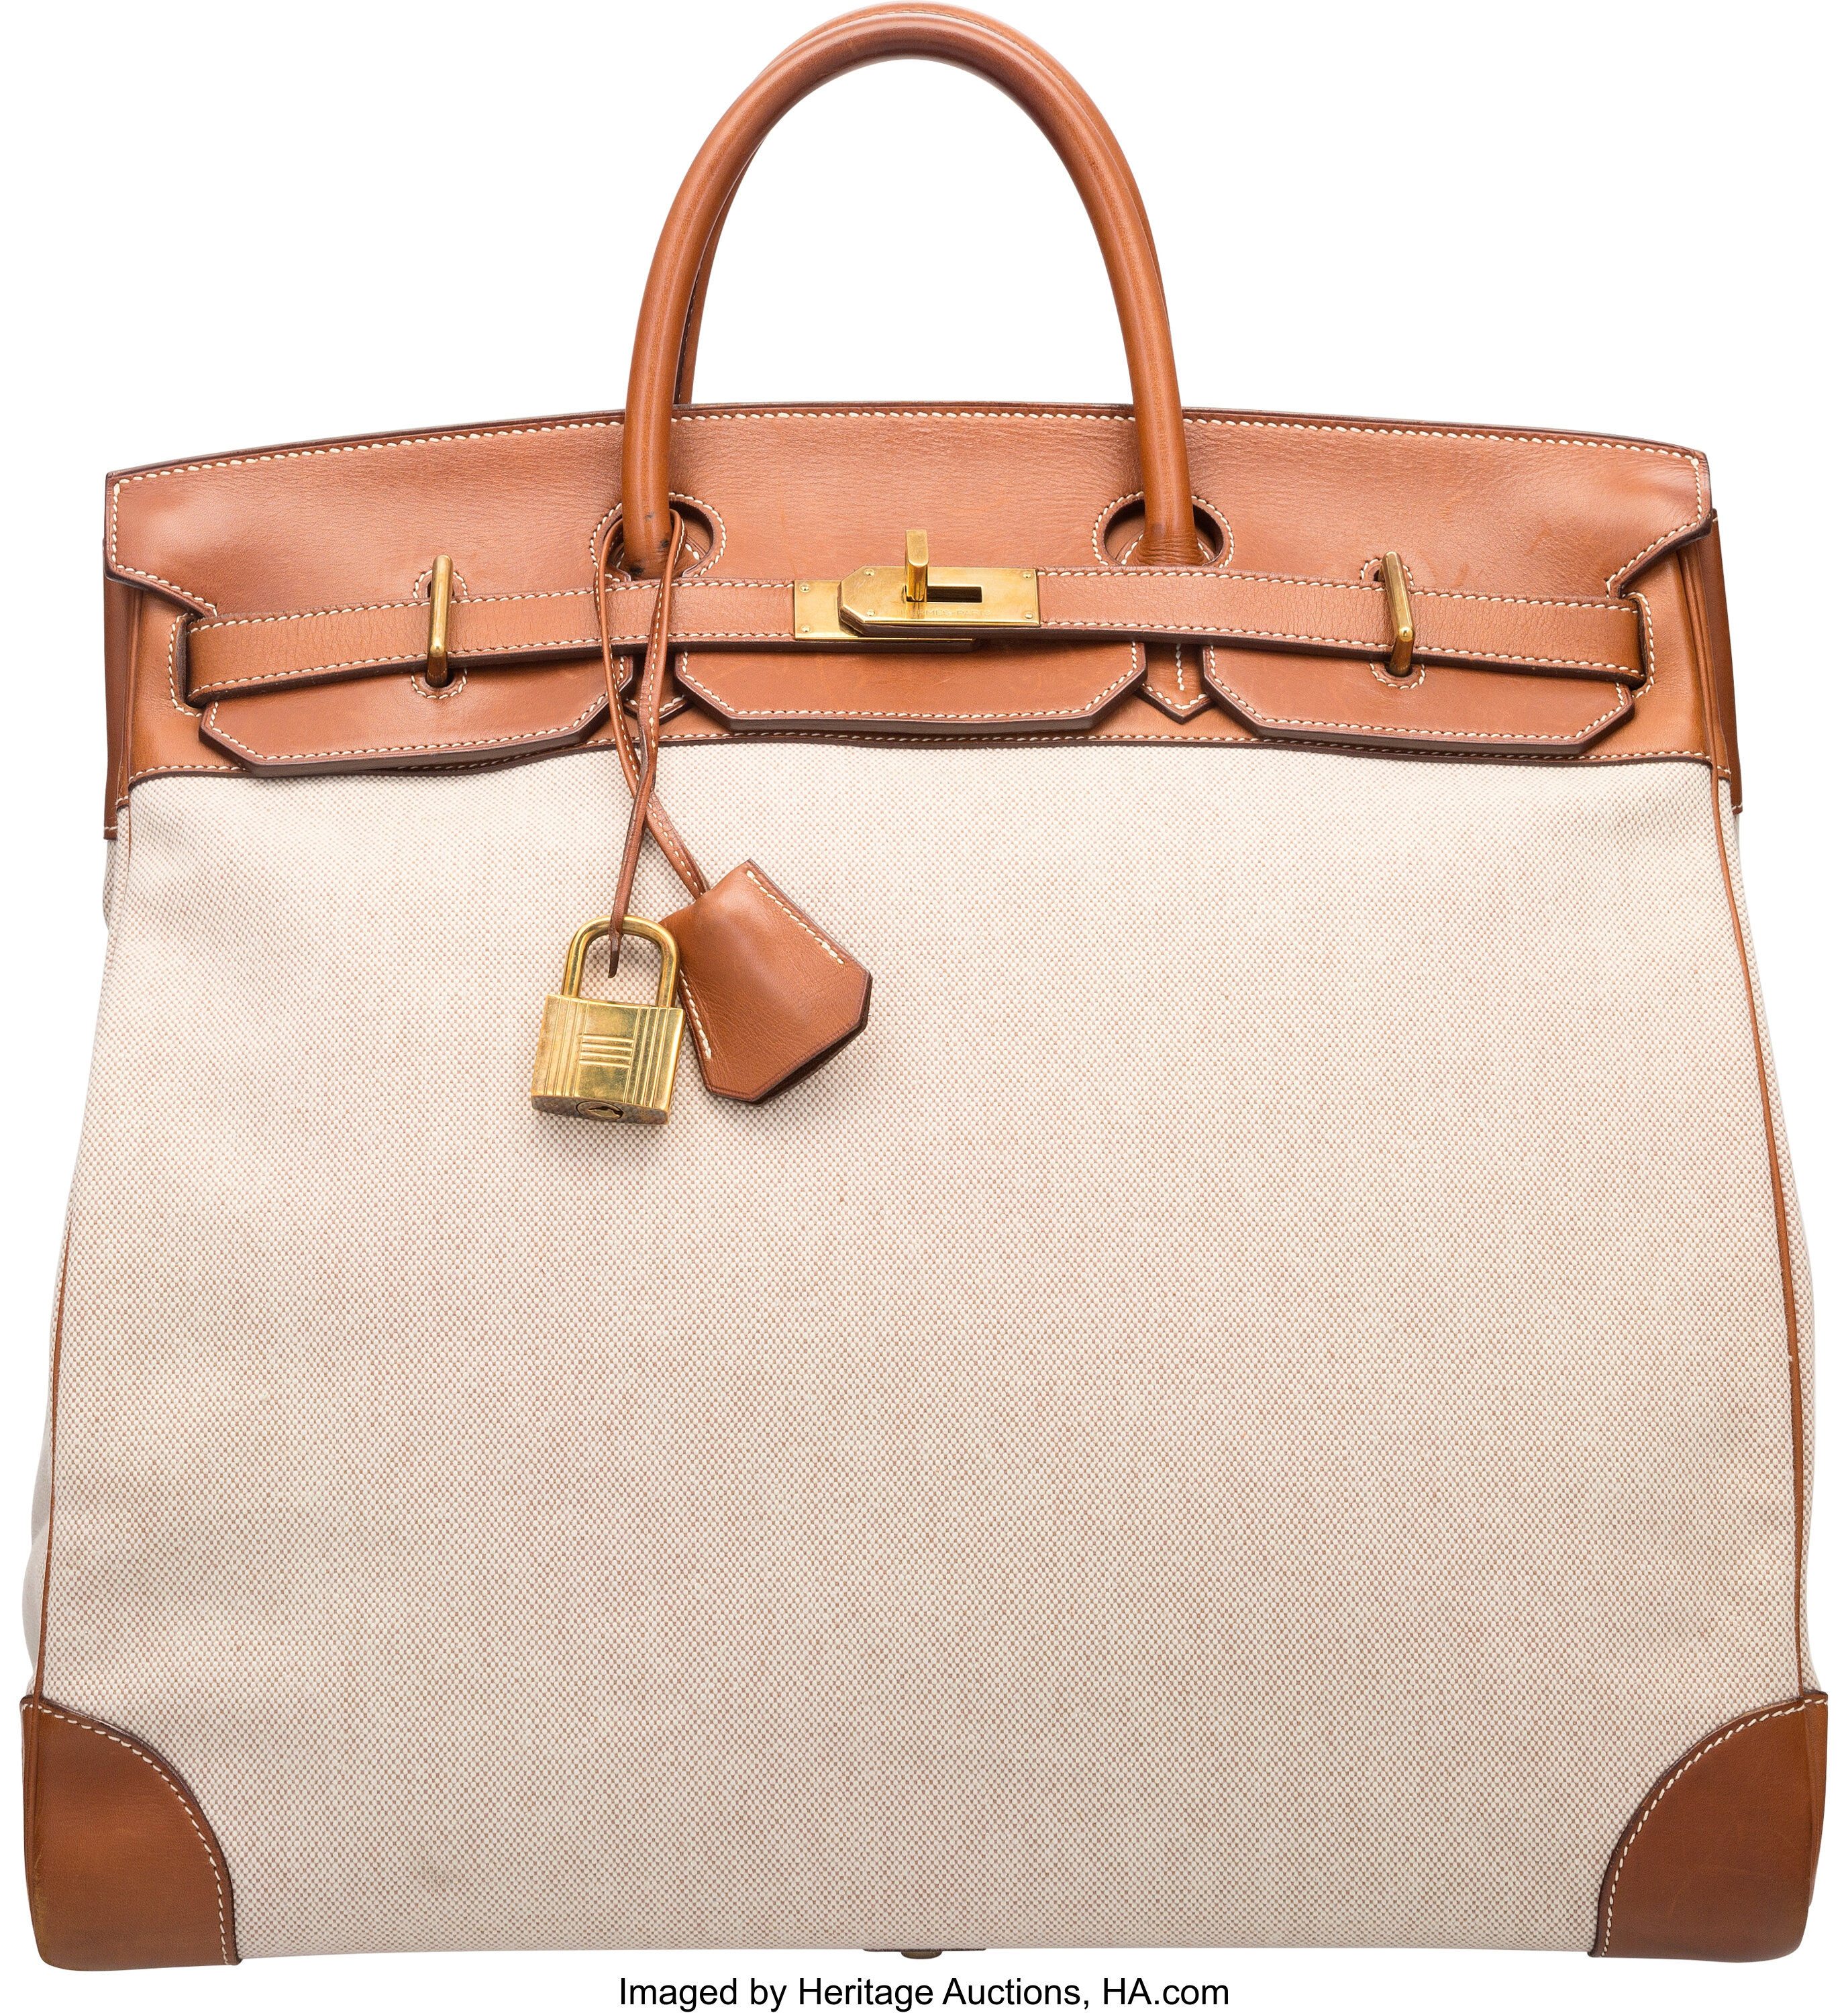 Hermes HAC Birkin Bag Toile and Fauve Barenia with Gold Hardware